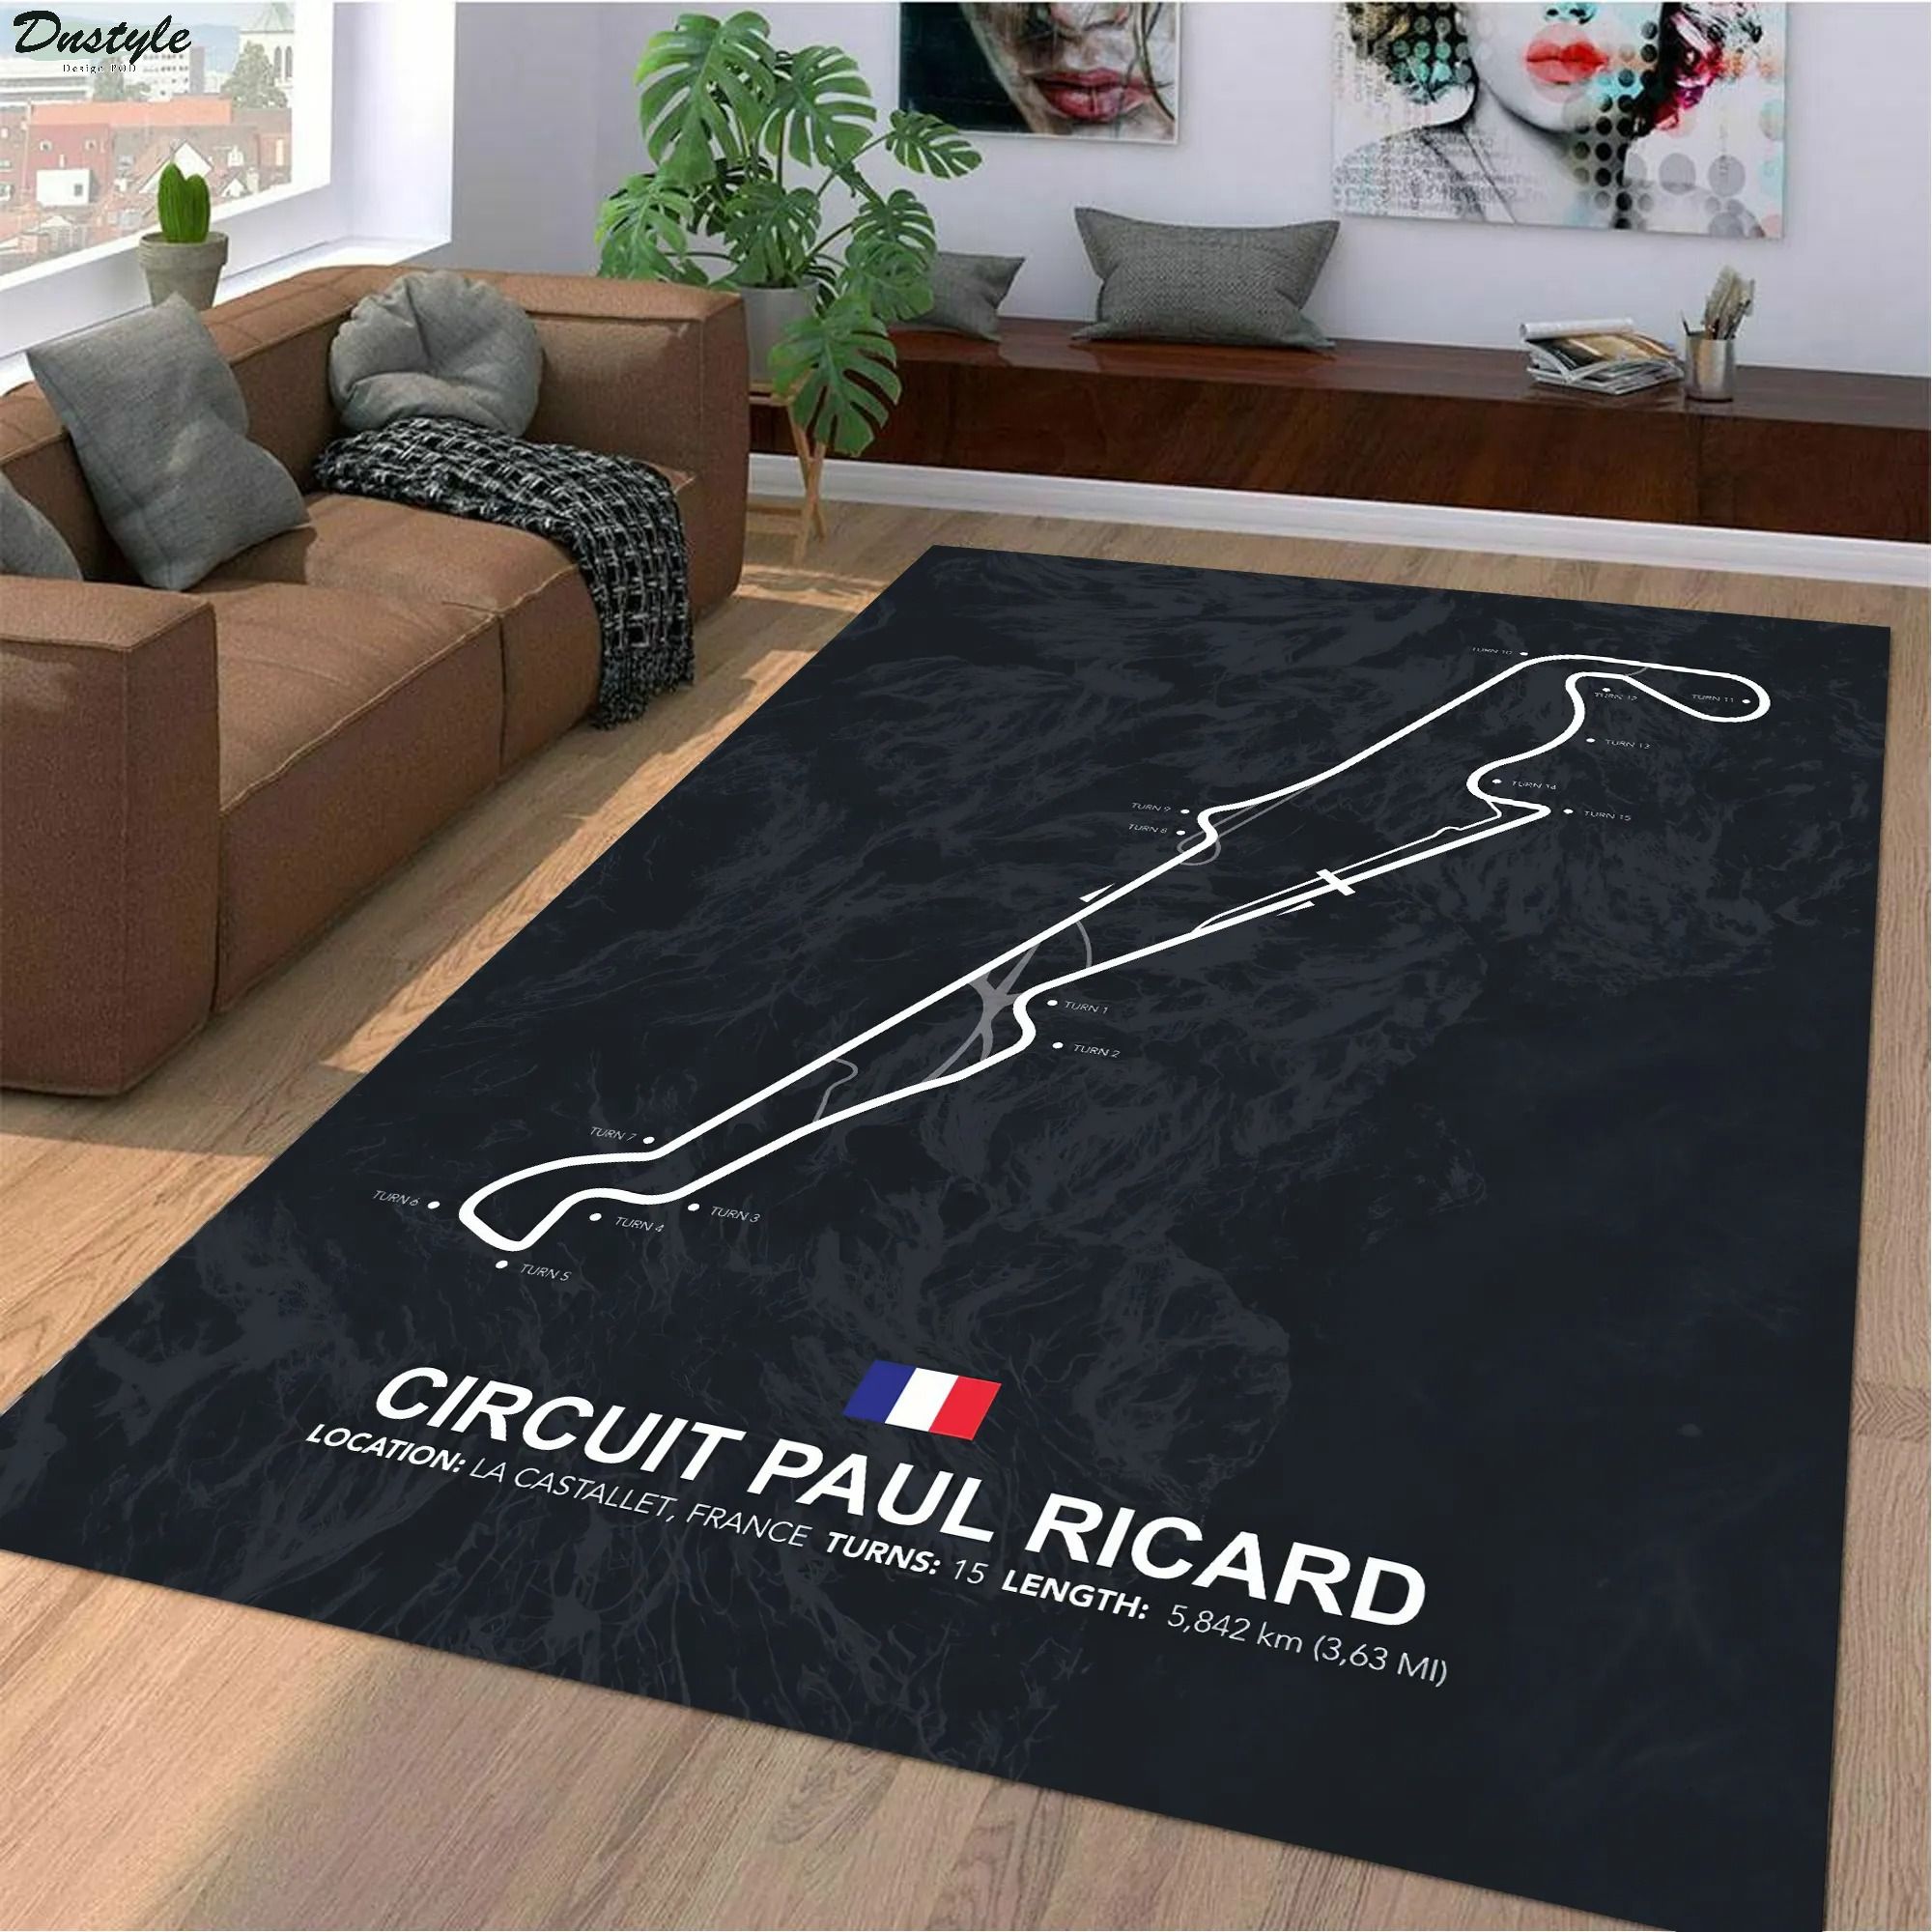 Circuit paul ricard f1 track rug 2